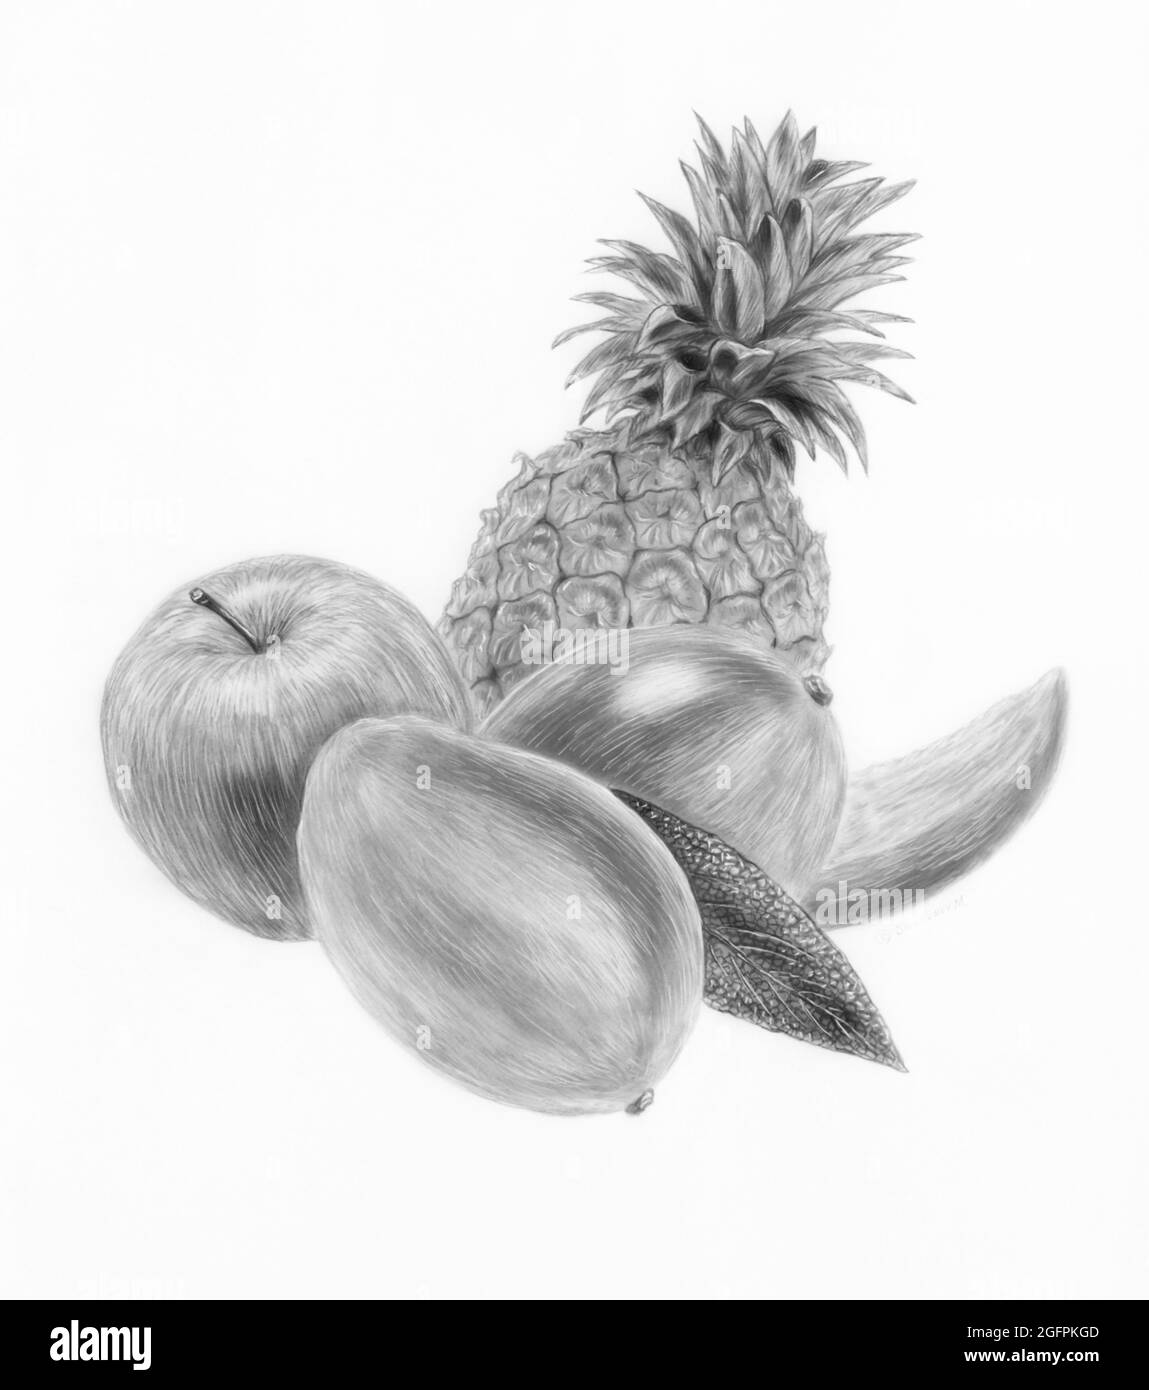 illustrations,berry,fruits, pineapple,mango,apple,still life Stock Photo